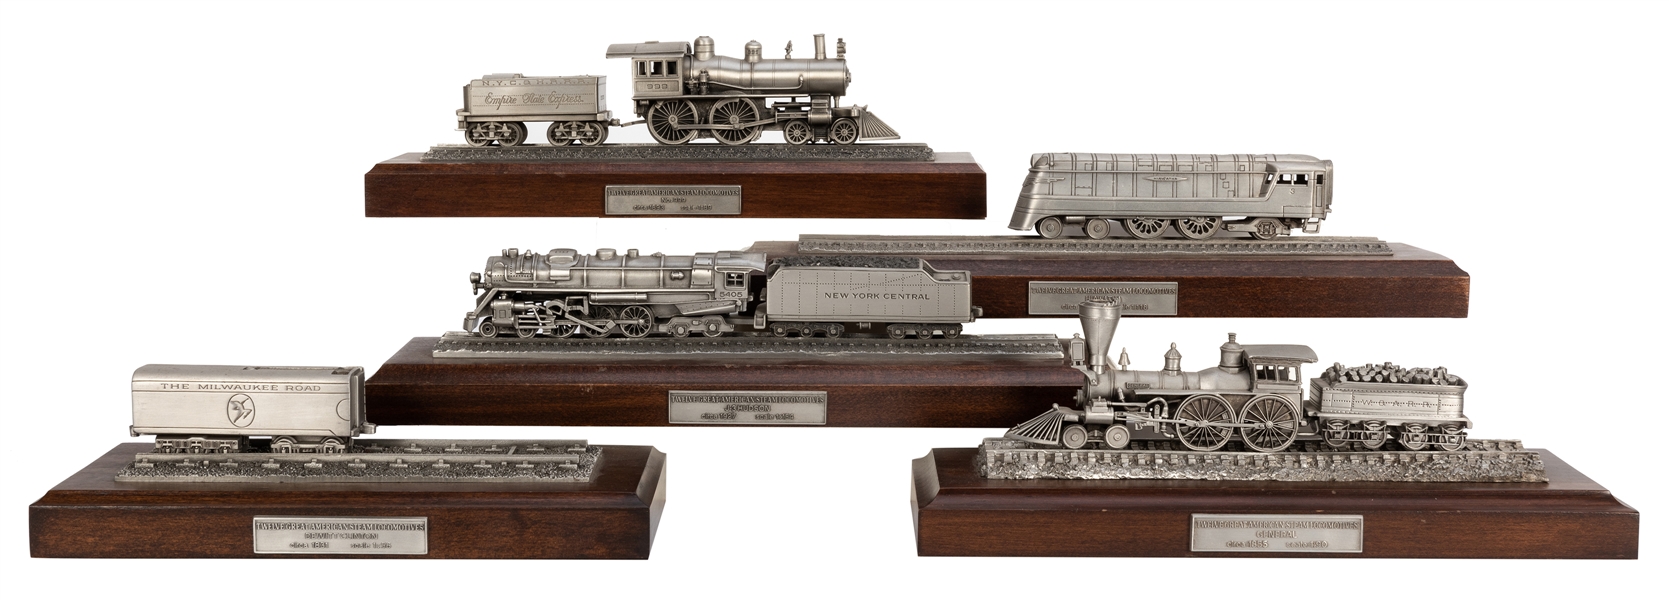 Five Danbury Great American Steam Locomotives.